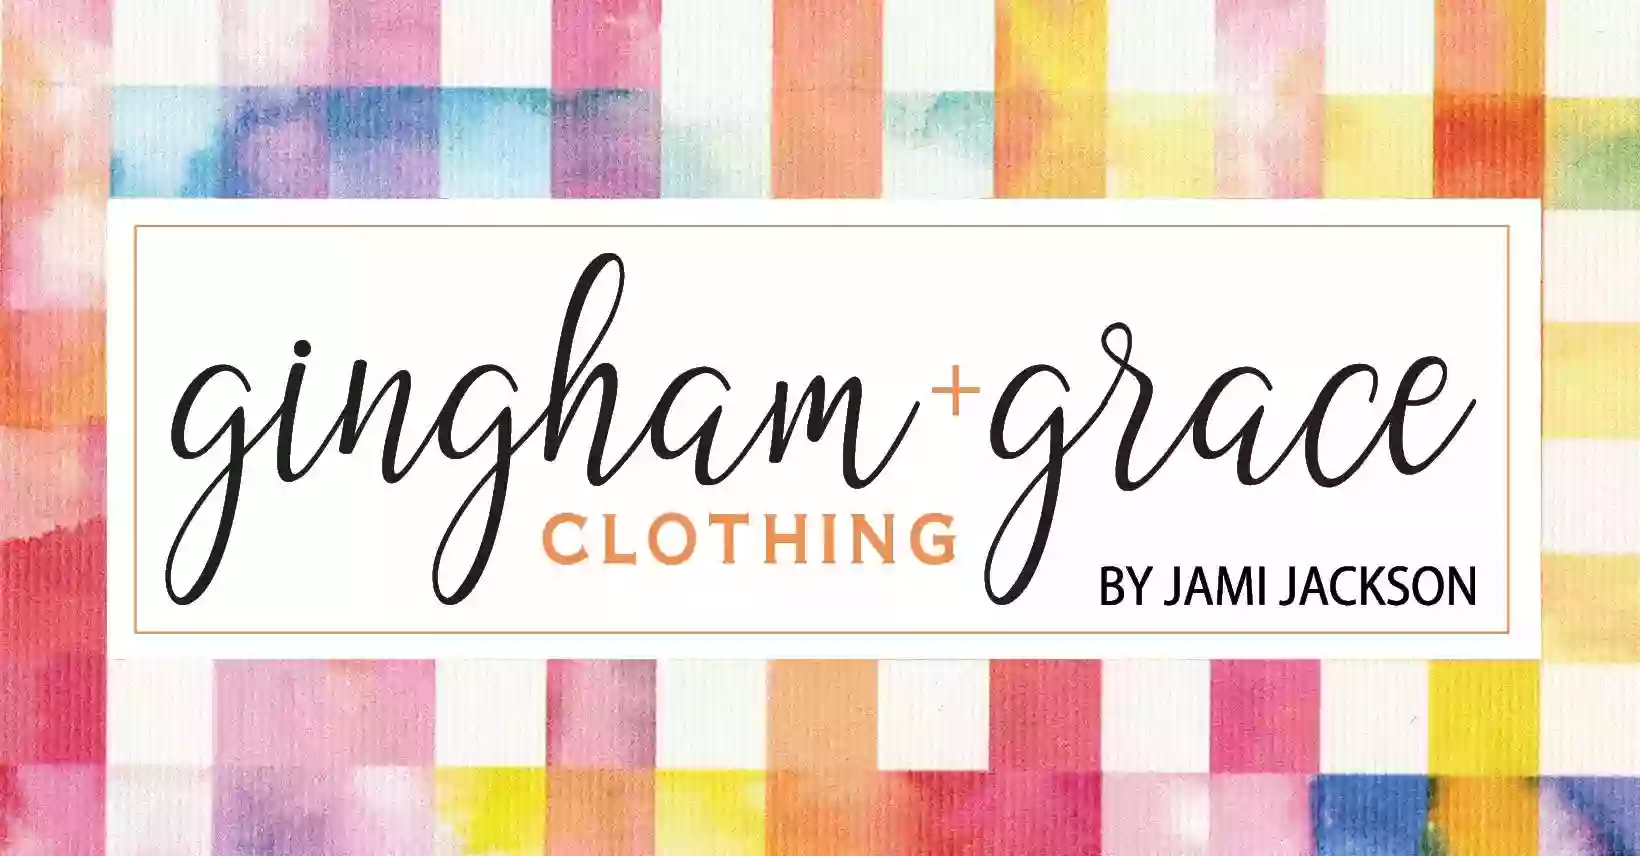 gingham + grace clothing